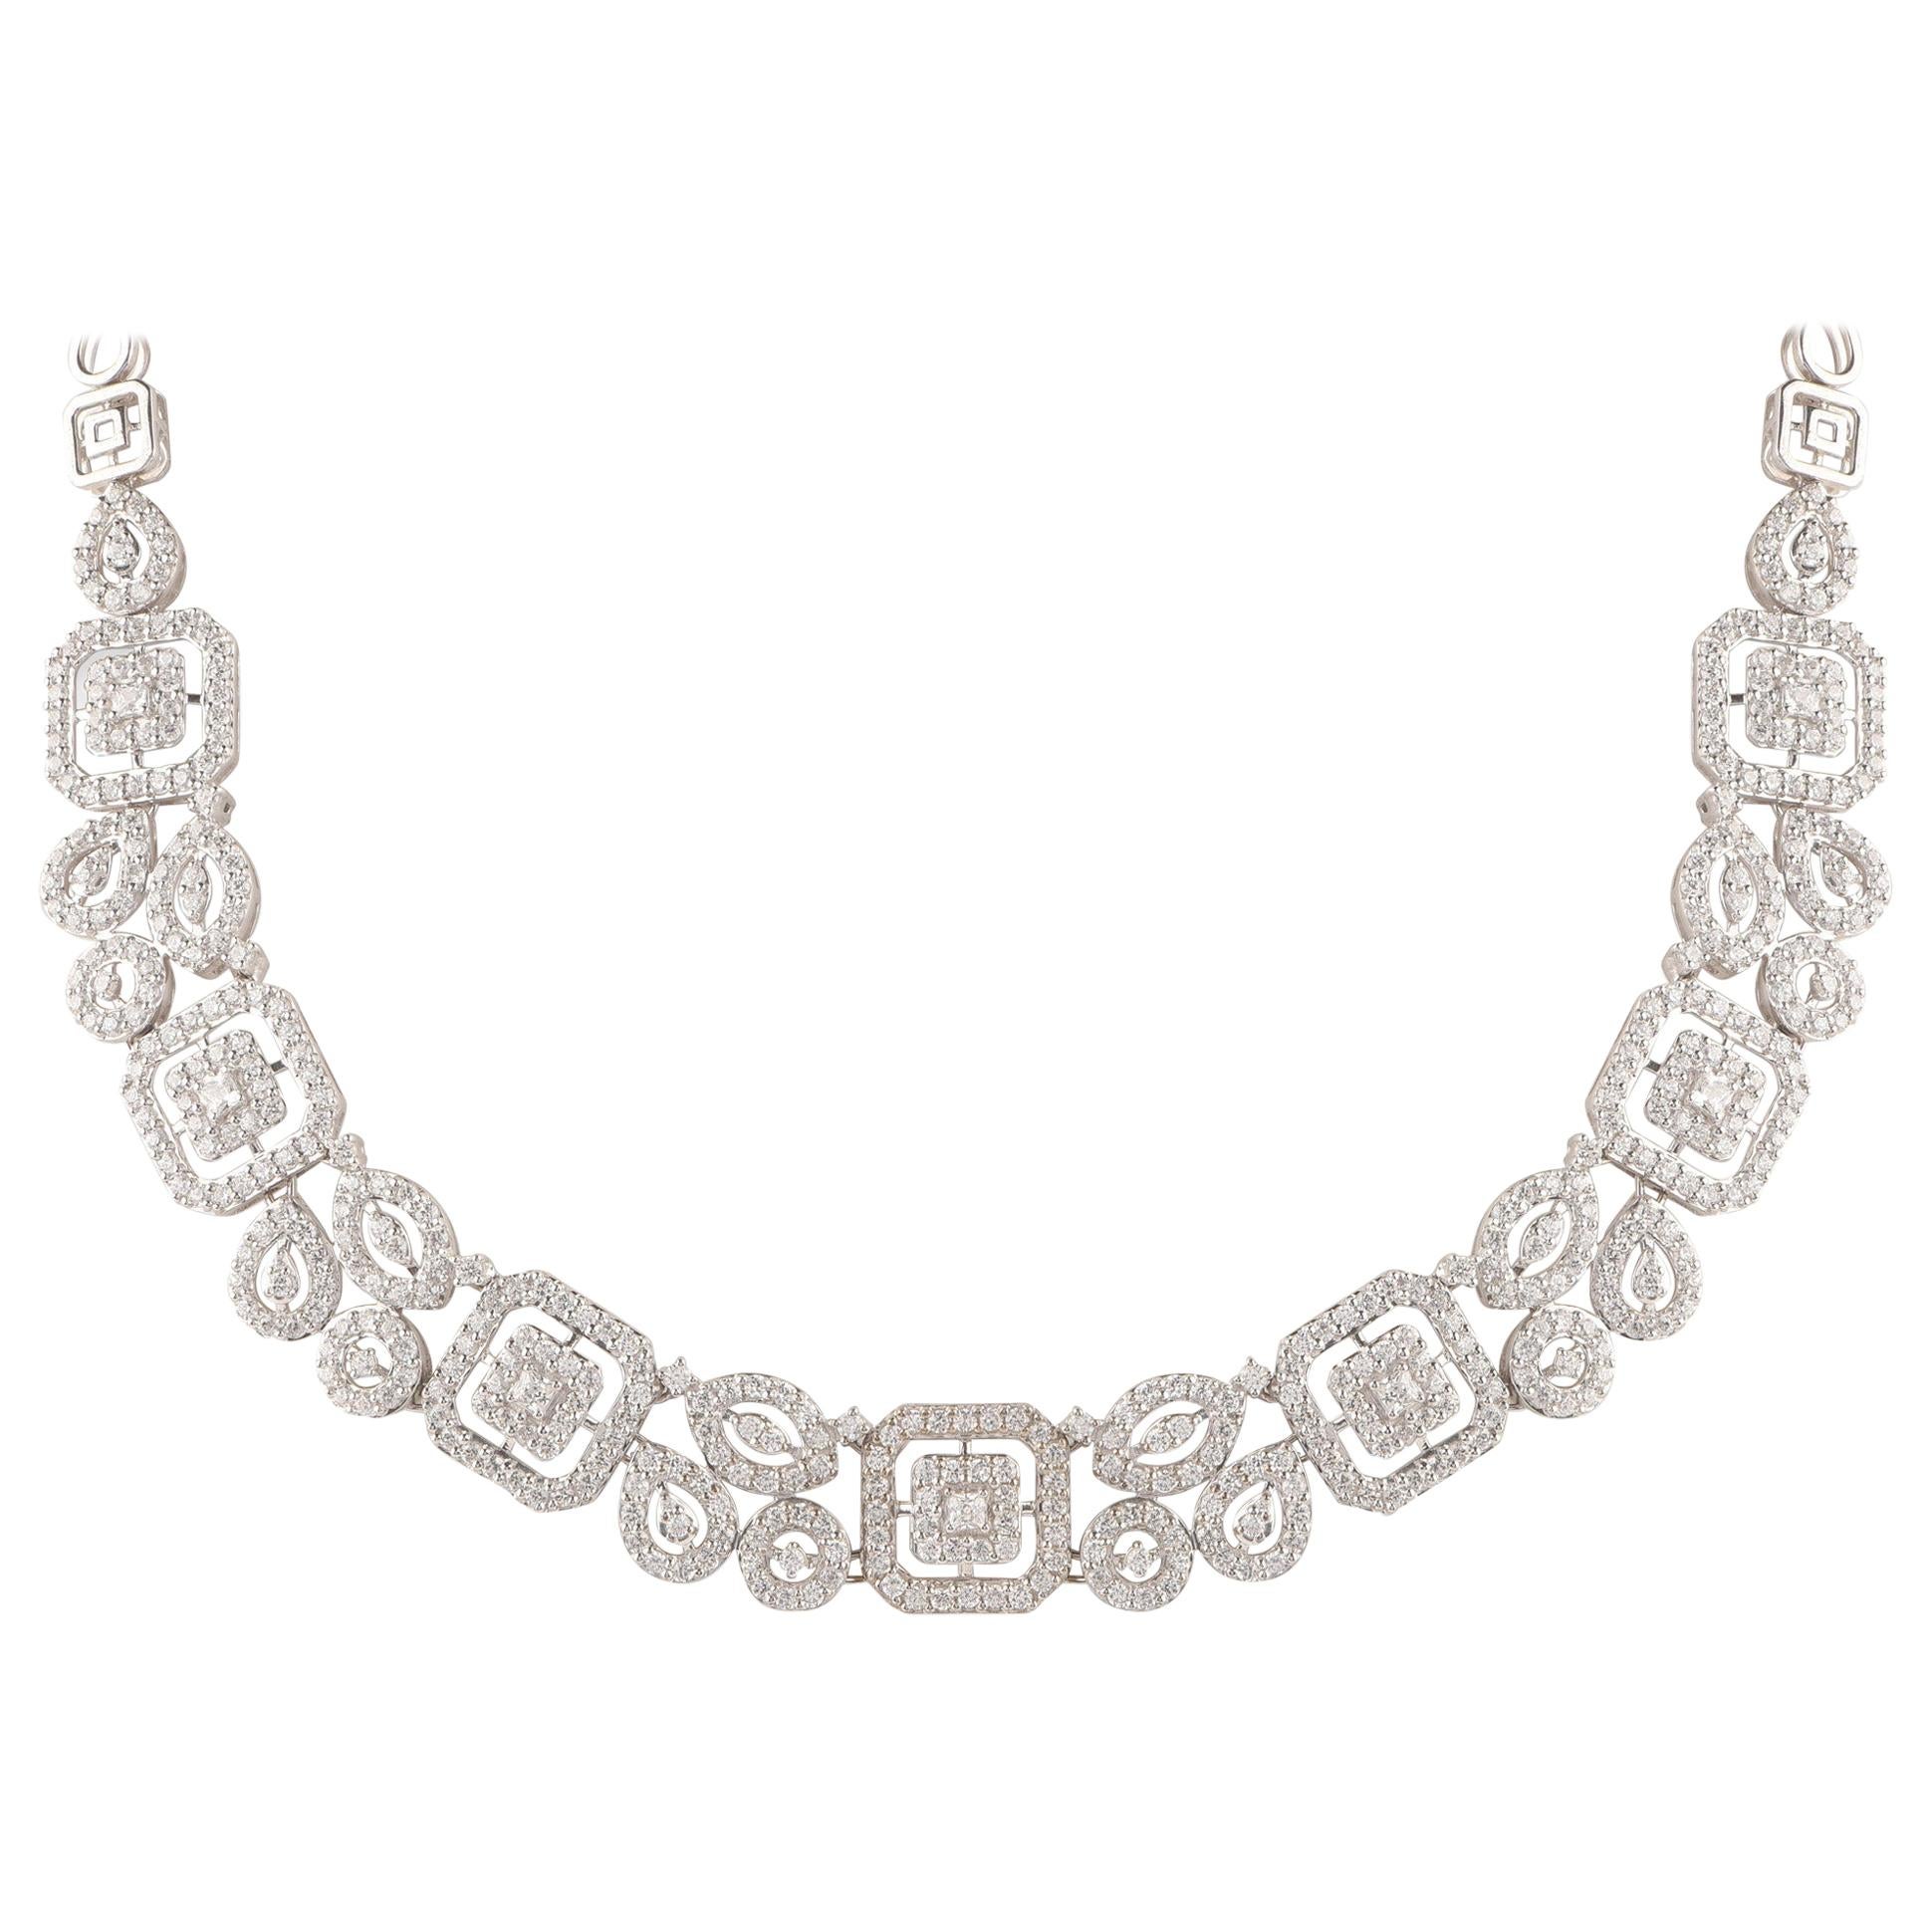  TJD 5.50 Carat Diamond 18 Karat White Gold Stunning Glorified Bridal Necklace For Sale